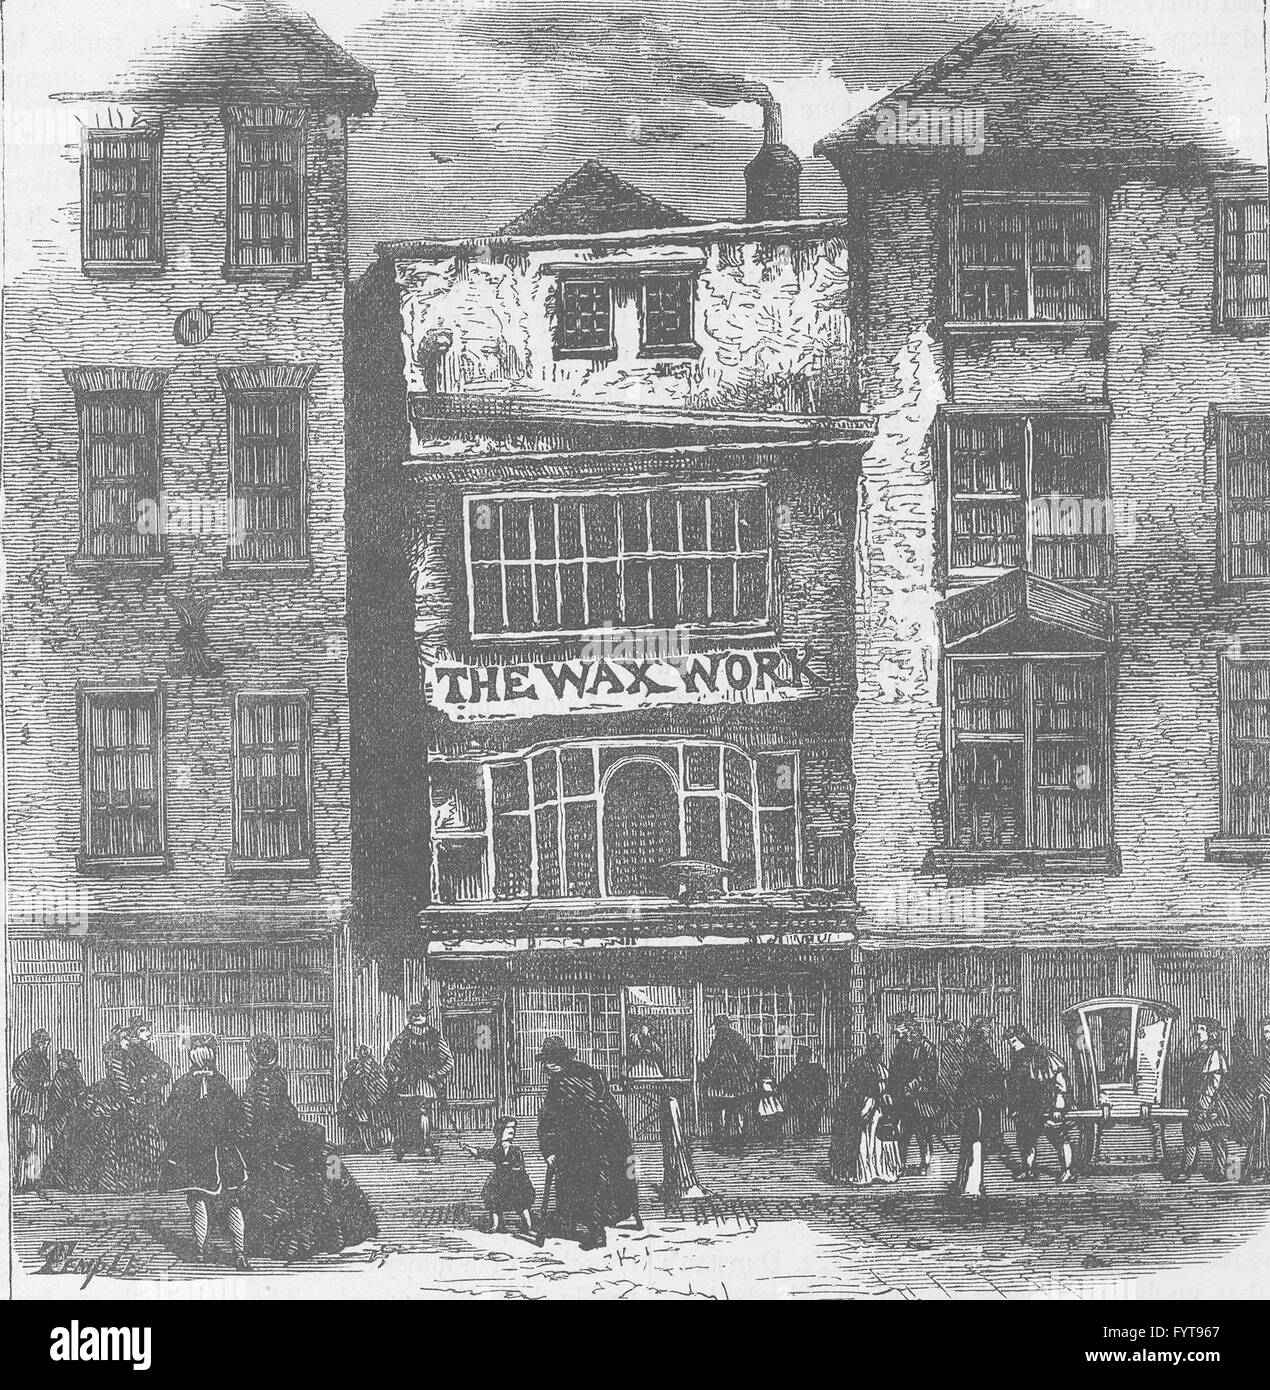 FLEET STREET: Mrs. Salmon's wax-works. London, antique print c1880 Stock Photo